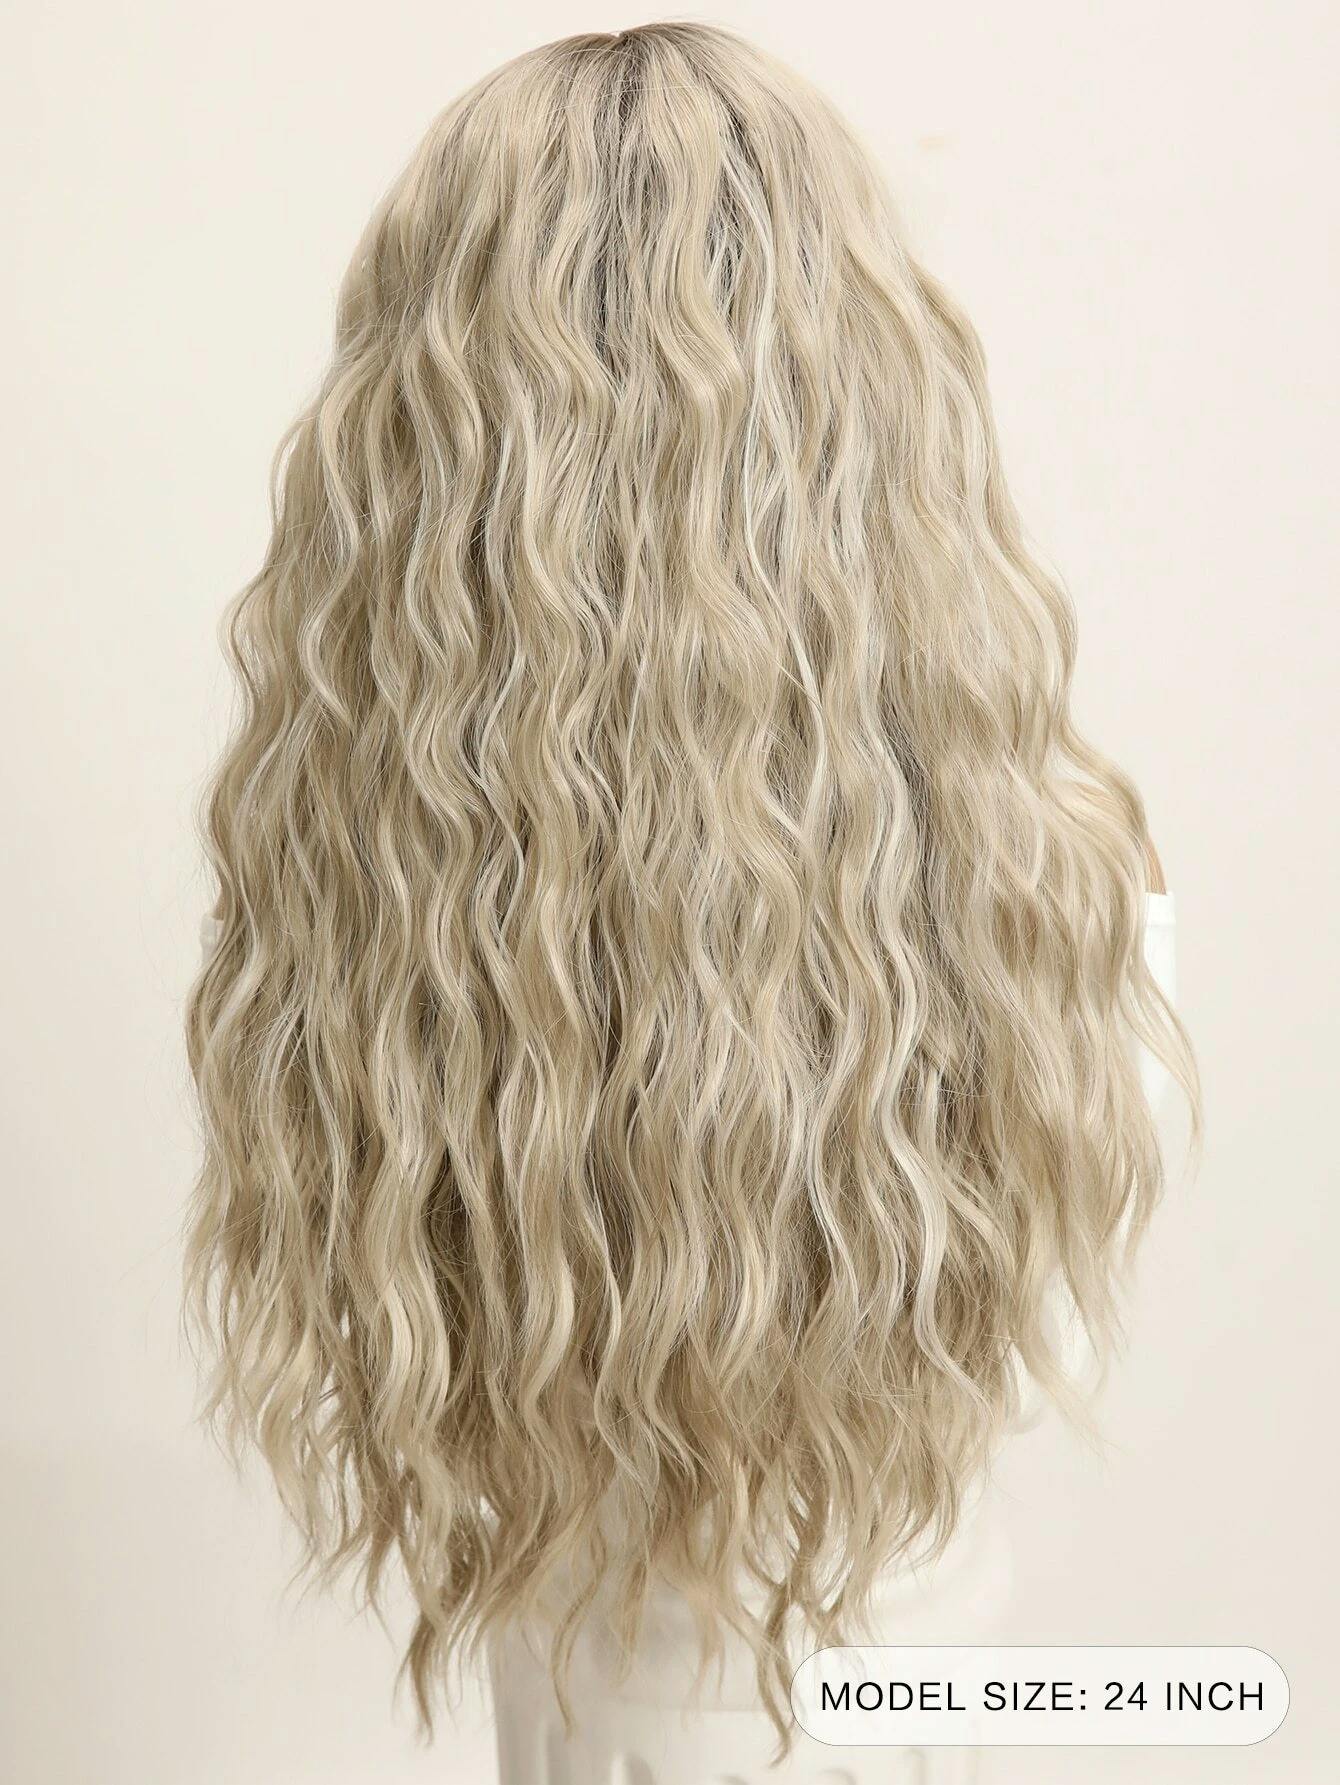 blonde curly wig